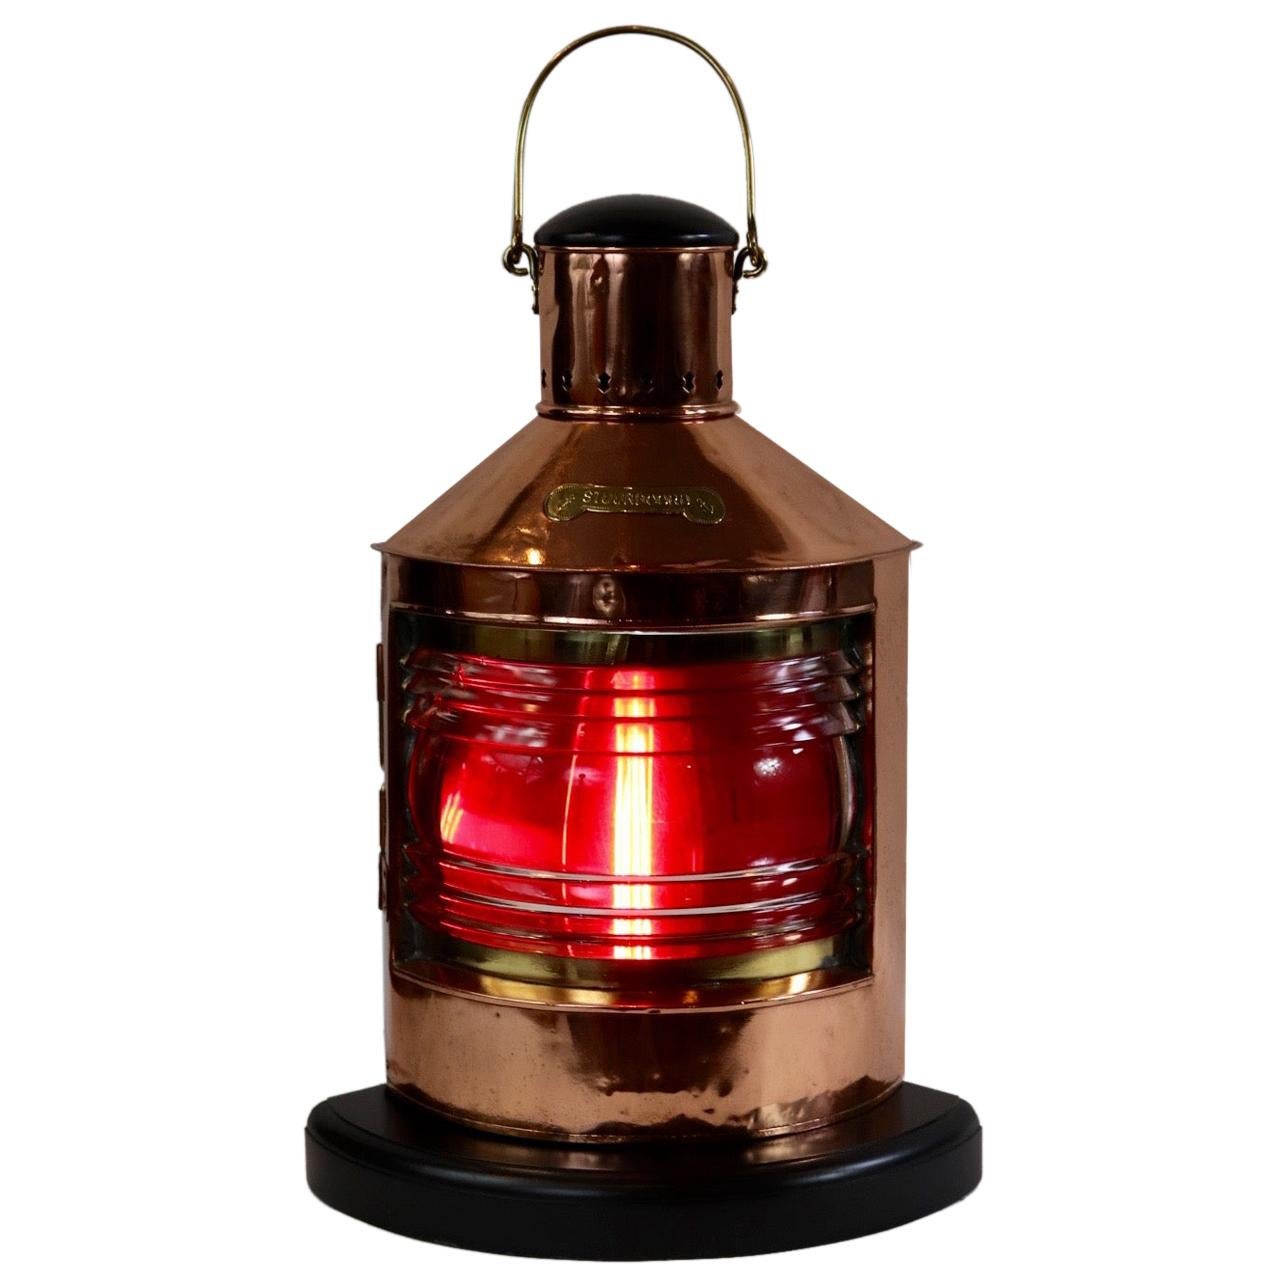 Dutch Ship Lantern with Copper Body